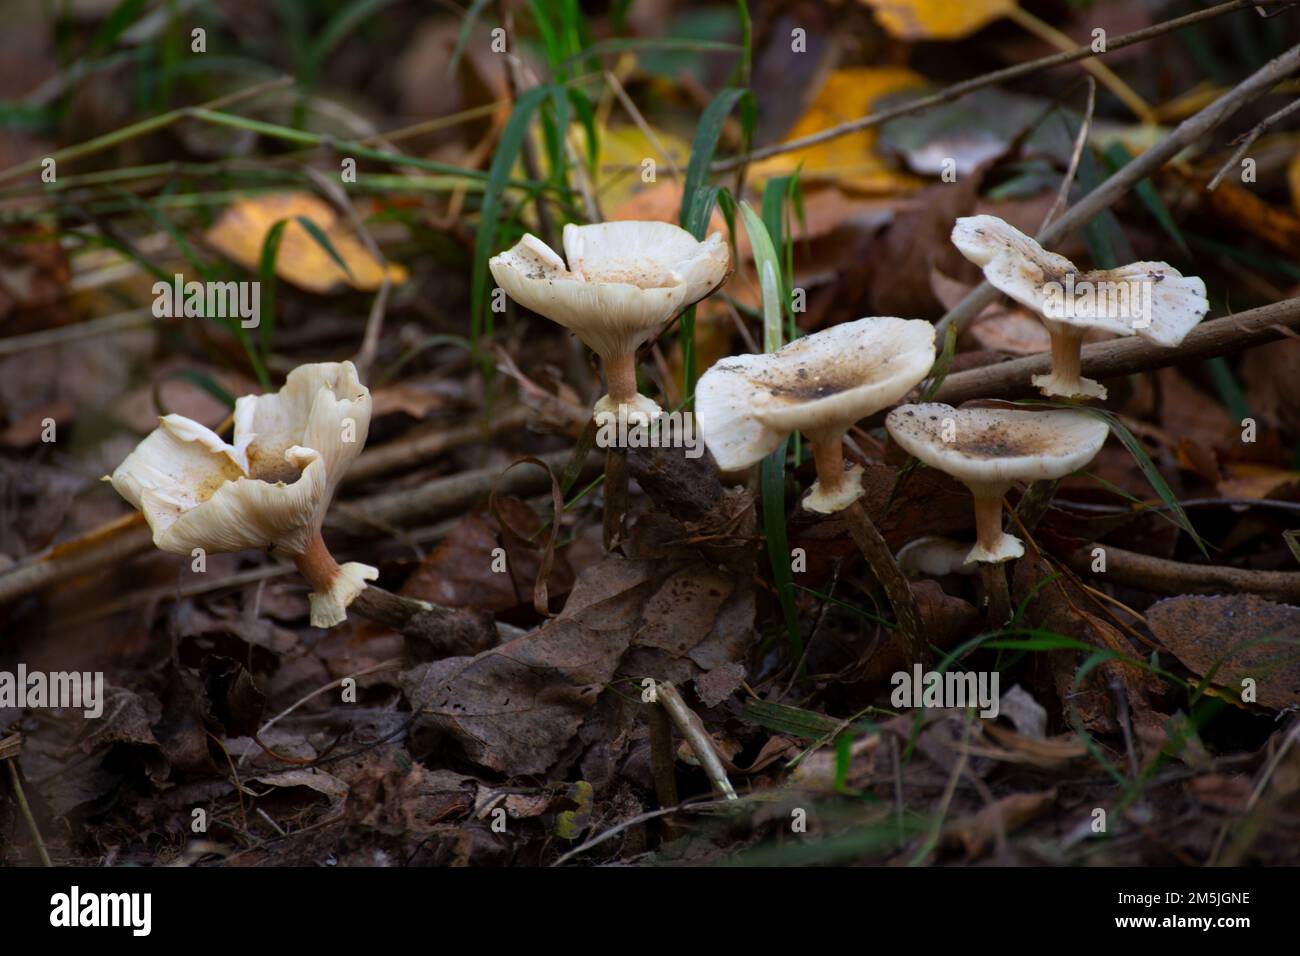 autumn mushroom Clitocybe Stock Photo